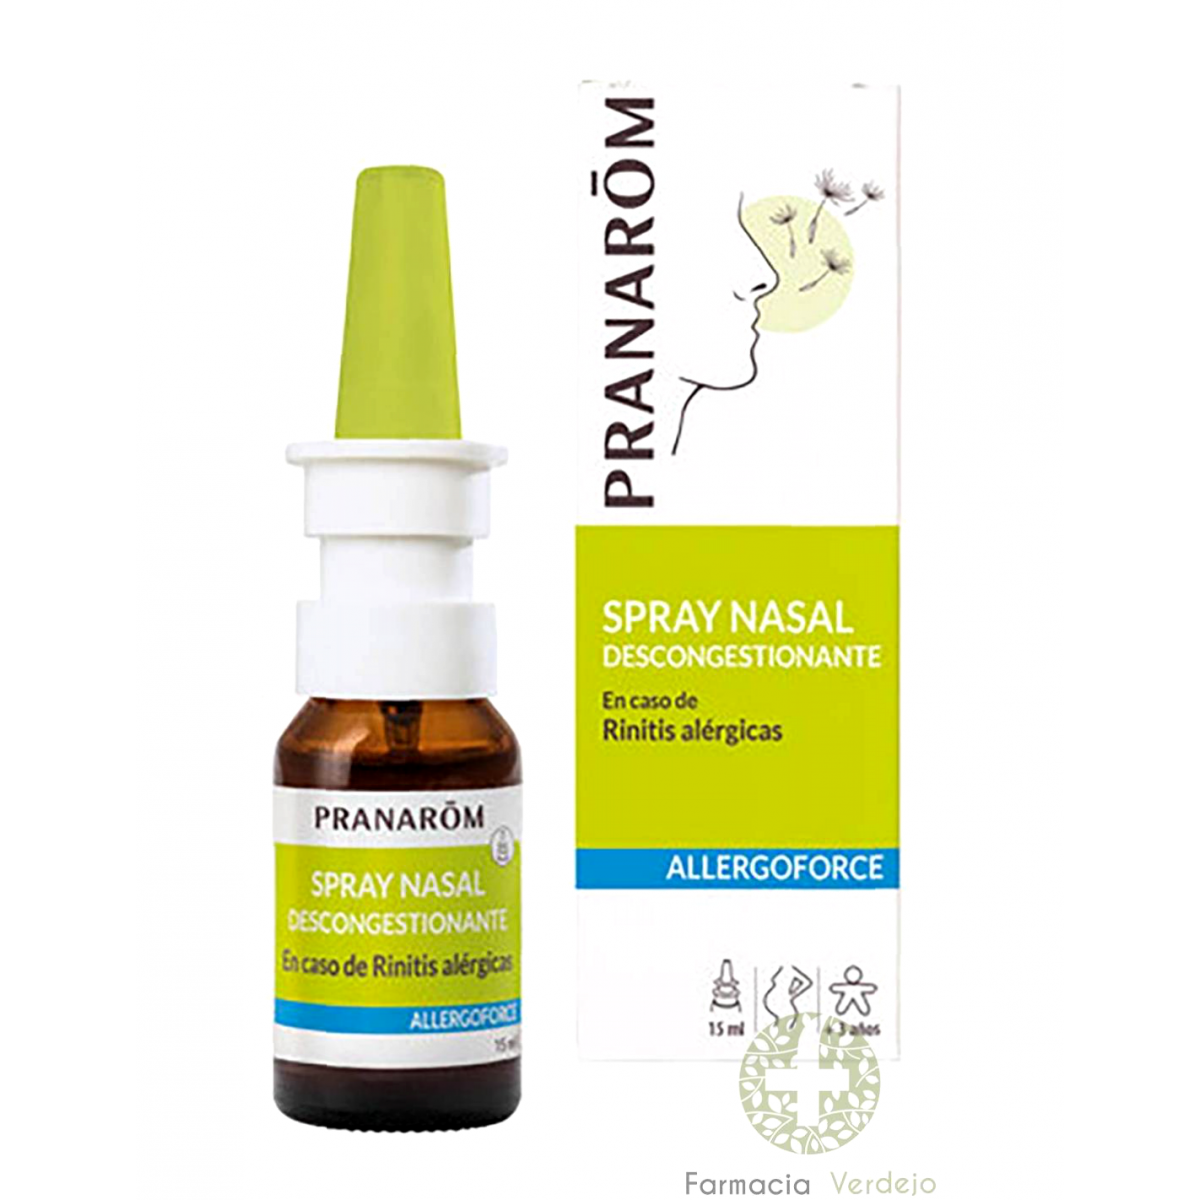 Allergoforce Spray Nasal 15ml